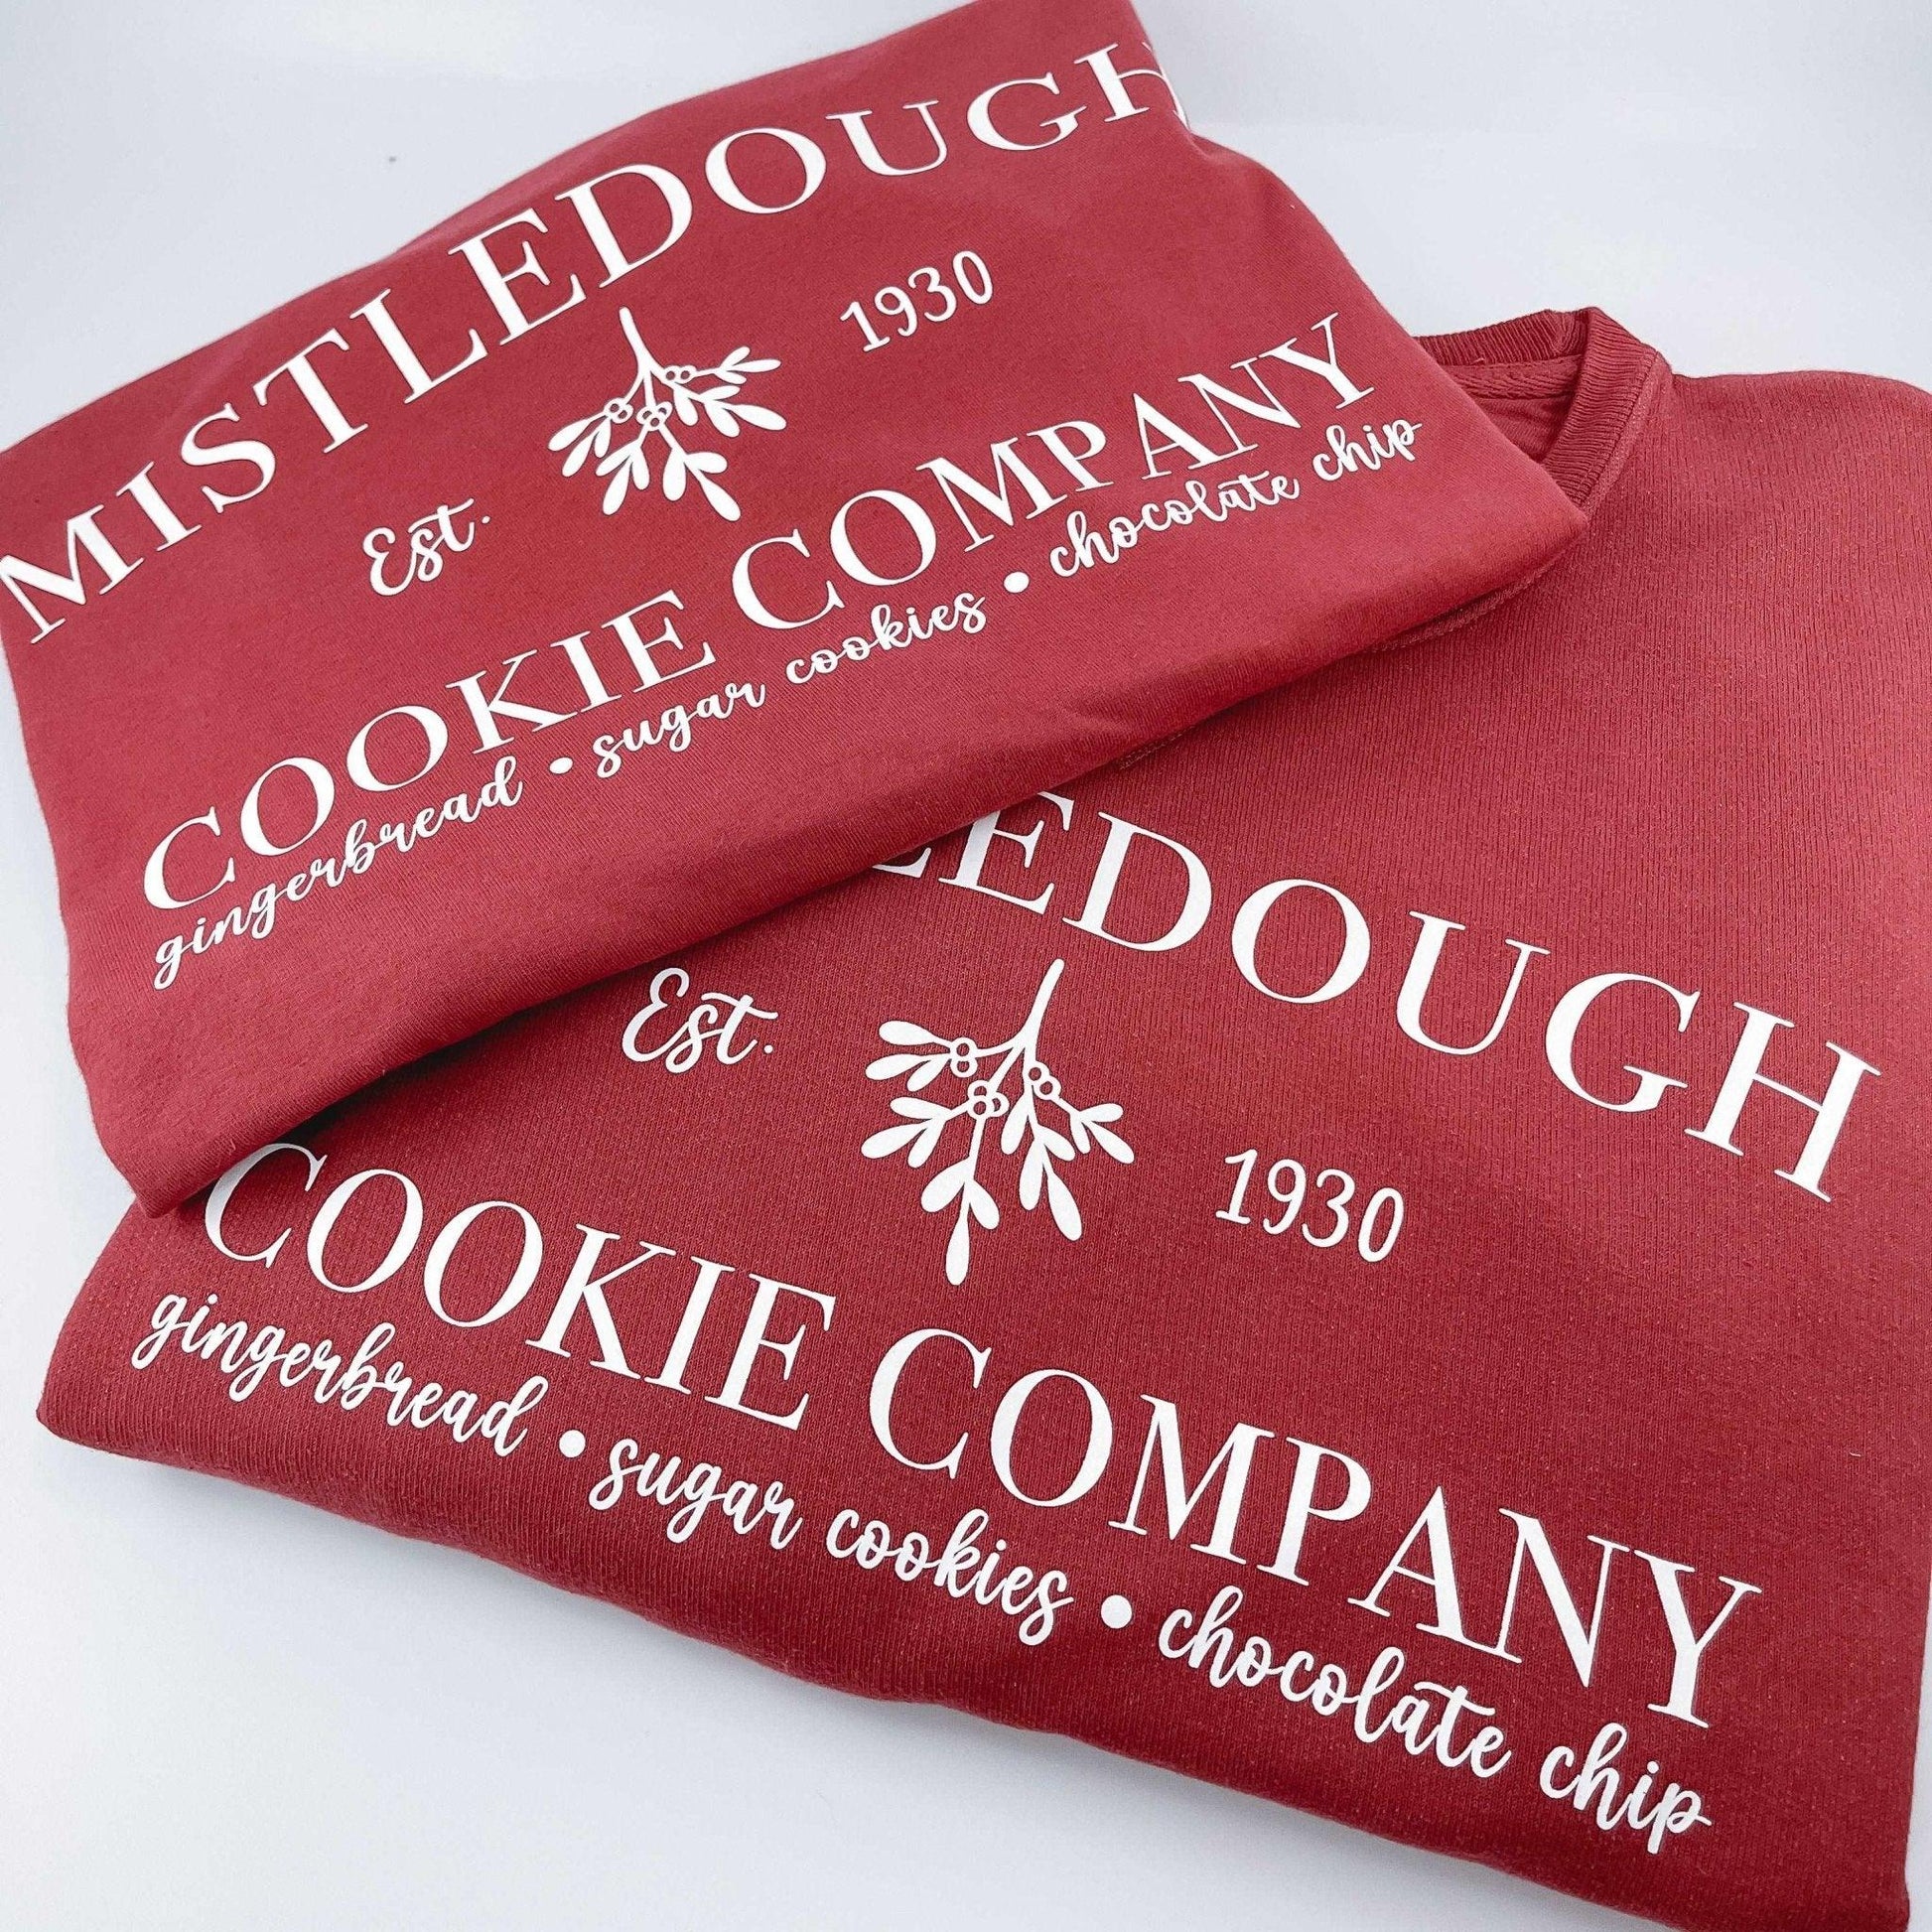 Mistledough Cookie Co Sweatshirt - Sunshine Soul MD